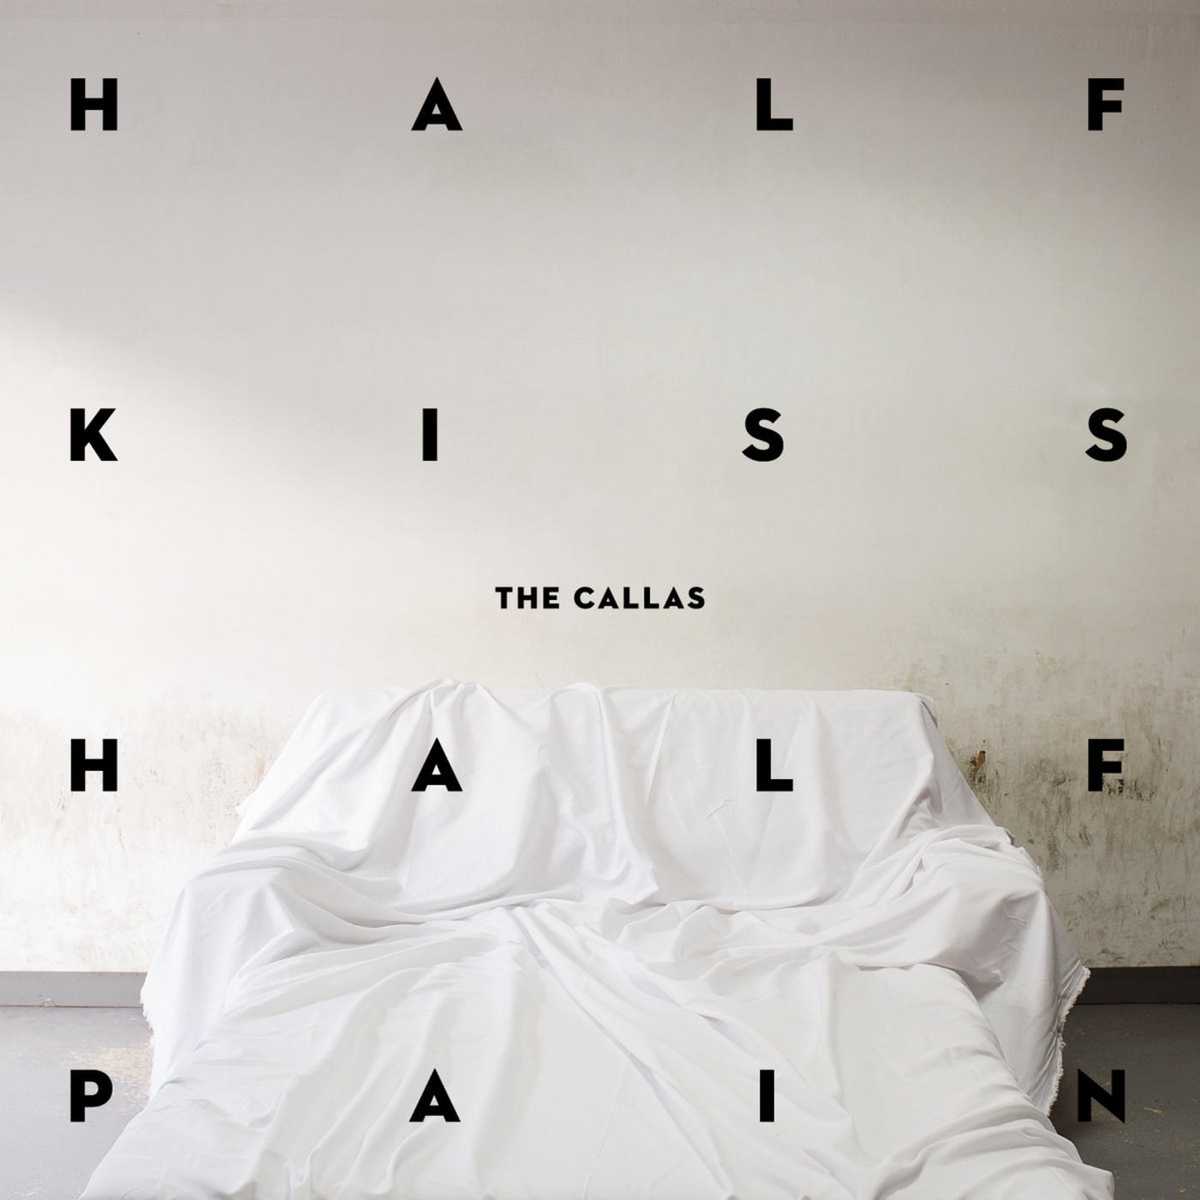 The Callas, Half Kiss, Half Pain